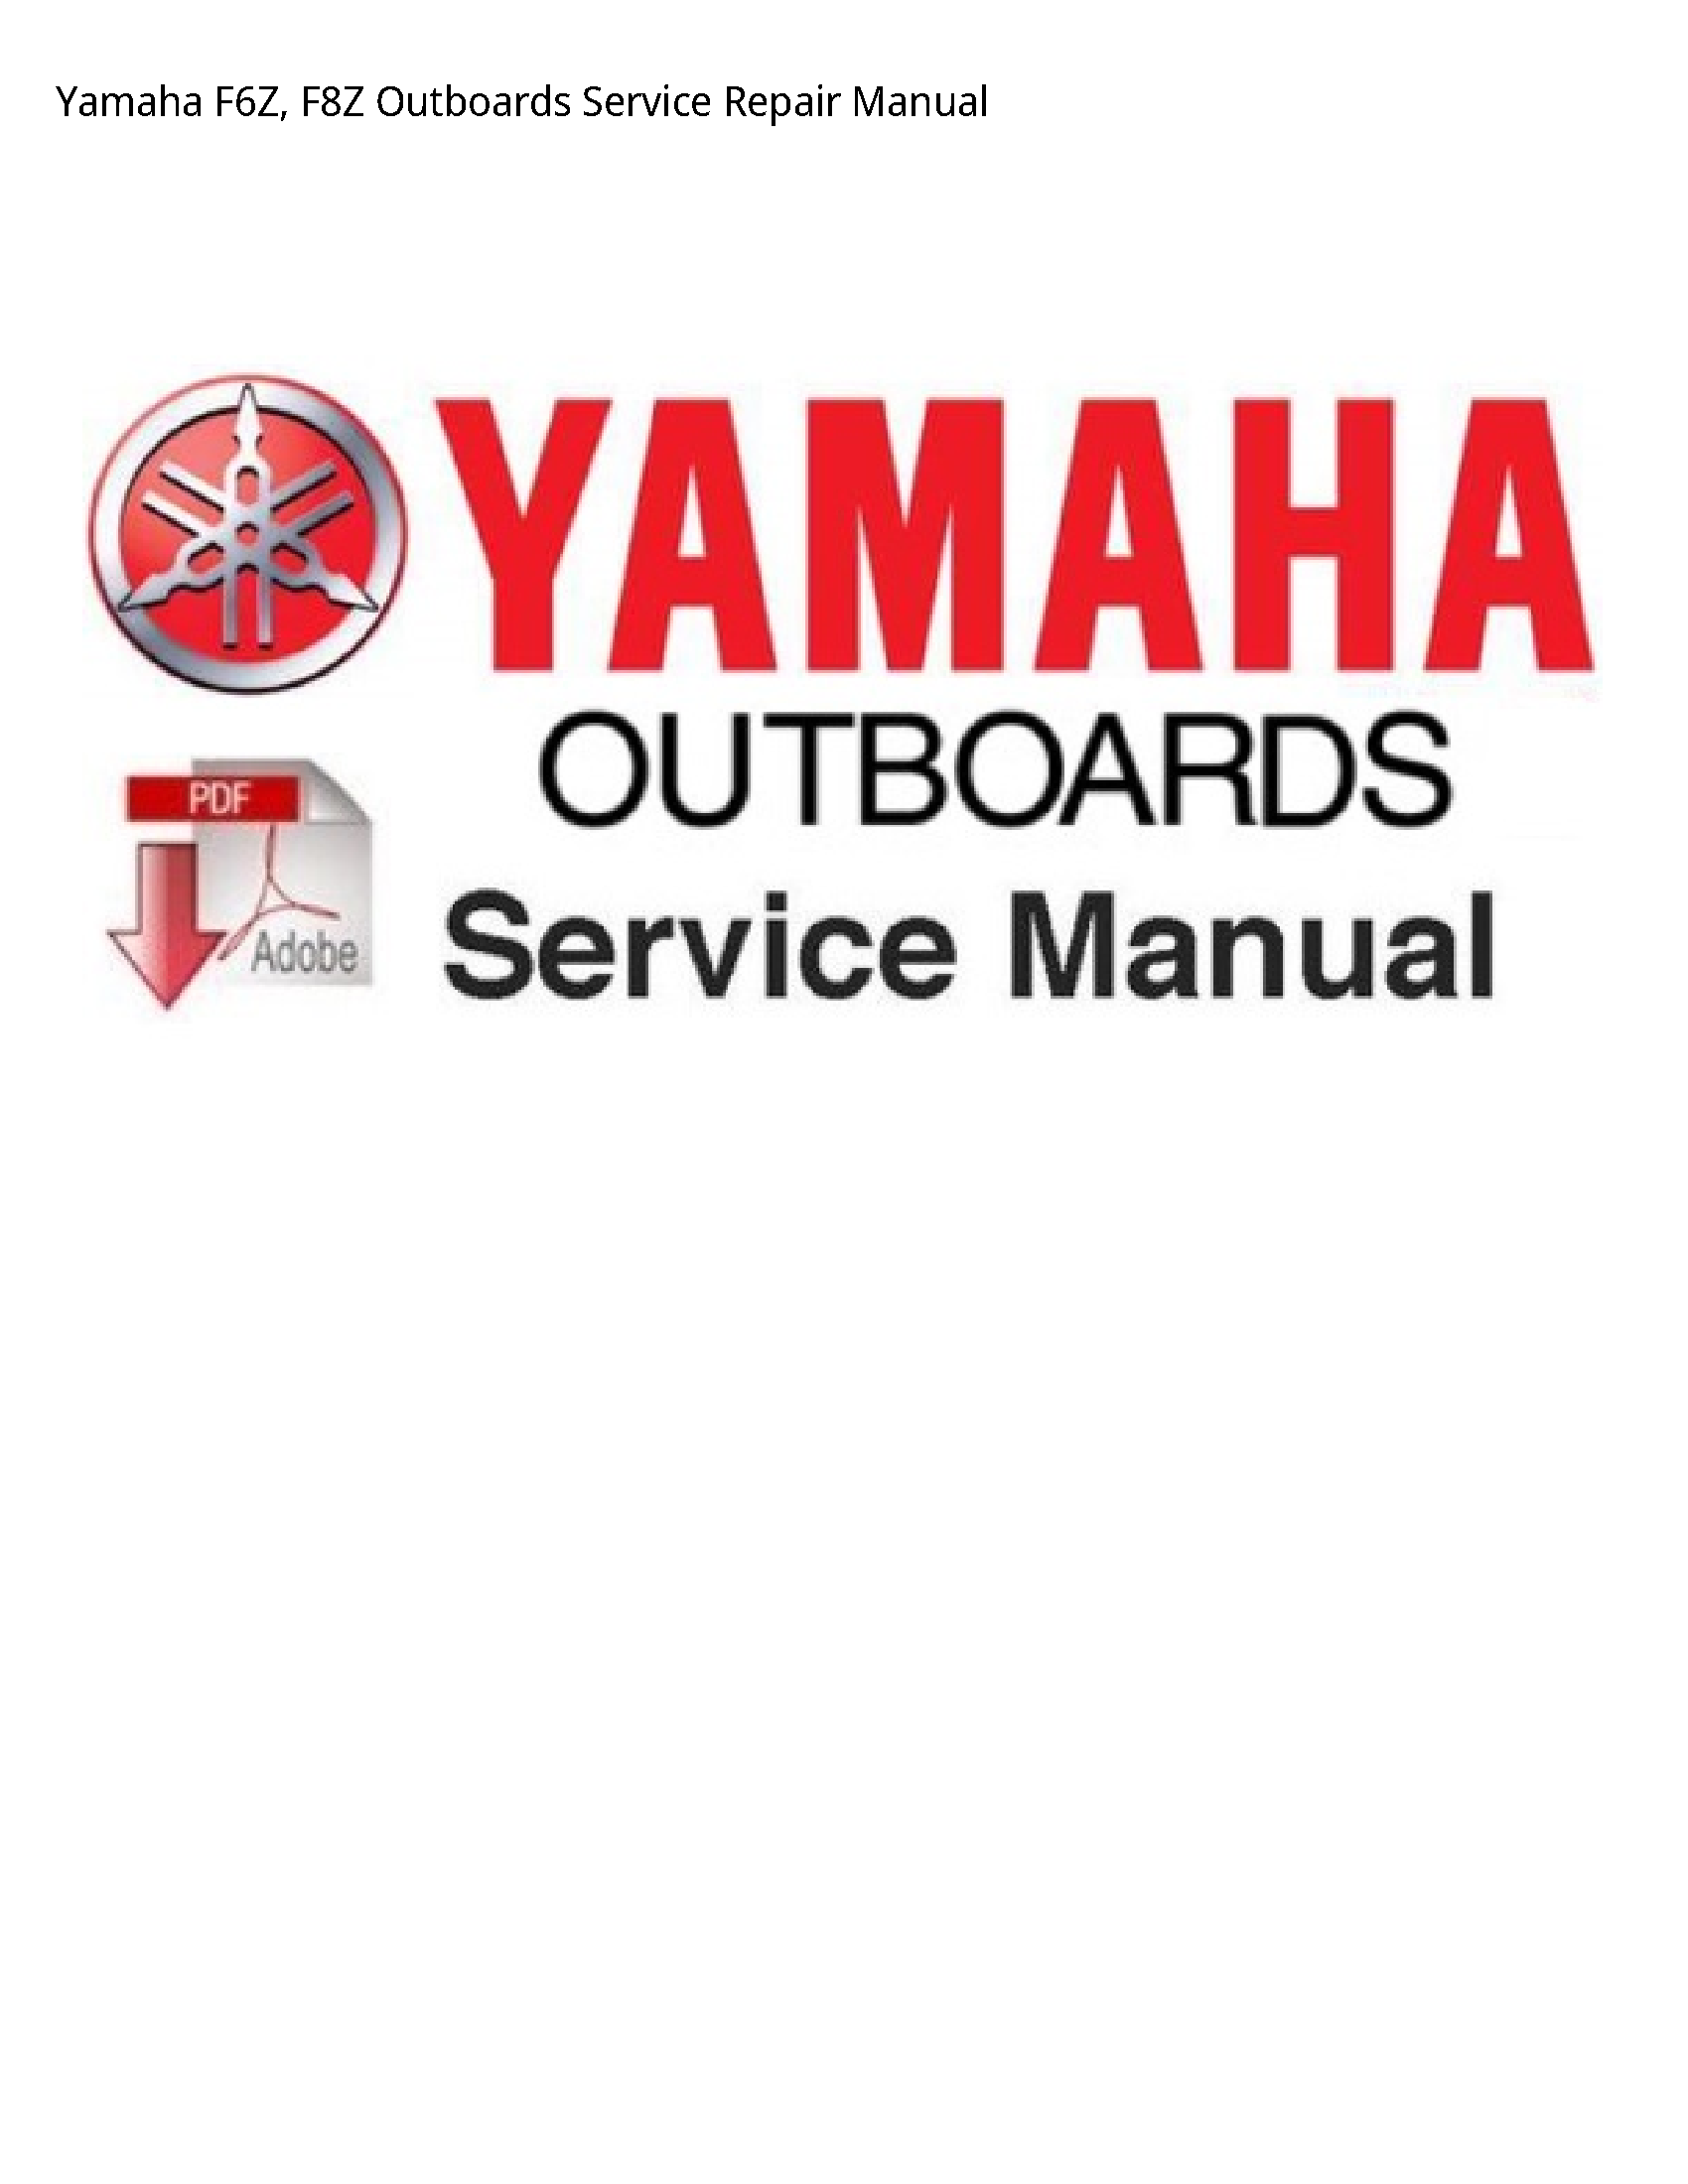 Yamaha F6Z Outboards manual